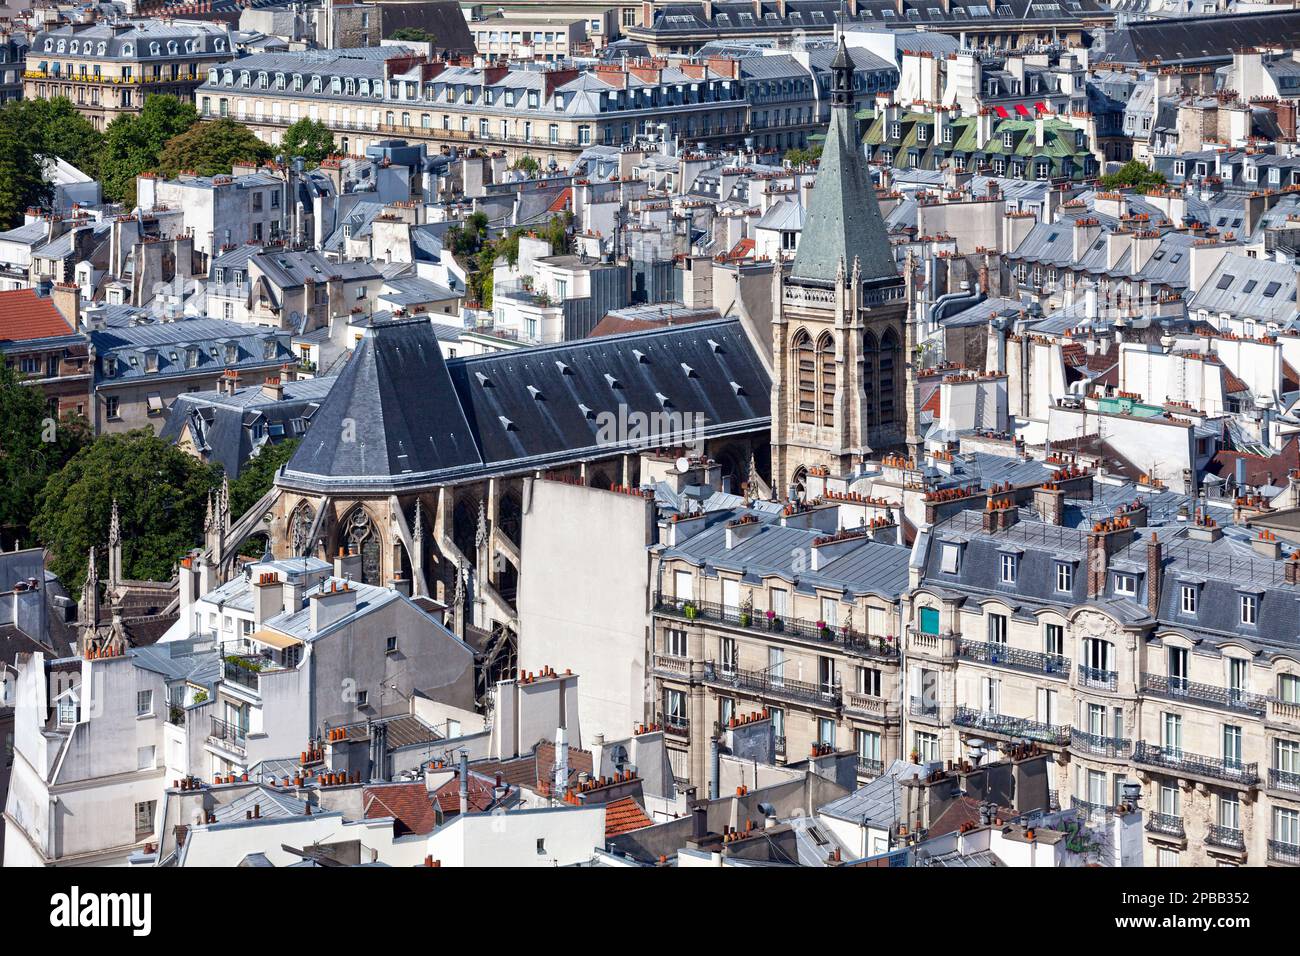 Paris, France - July 07 2017: Aerial view of the Church of Saint Severin, a Roman Catholic church in the Latin Quarter of Paris. Stock Photo